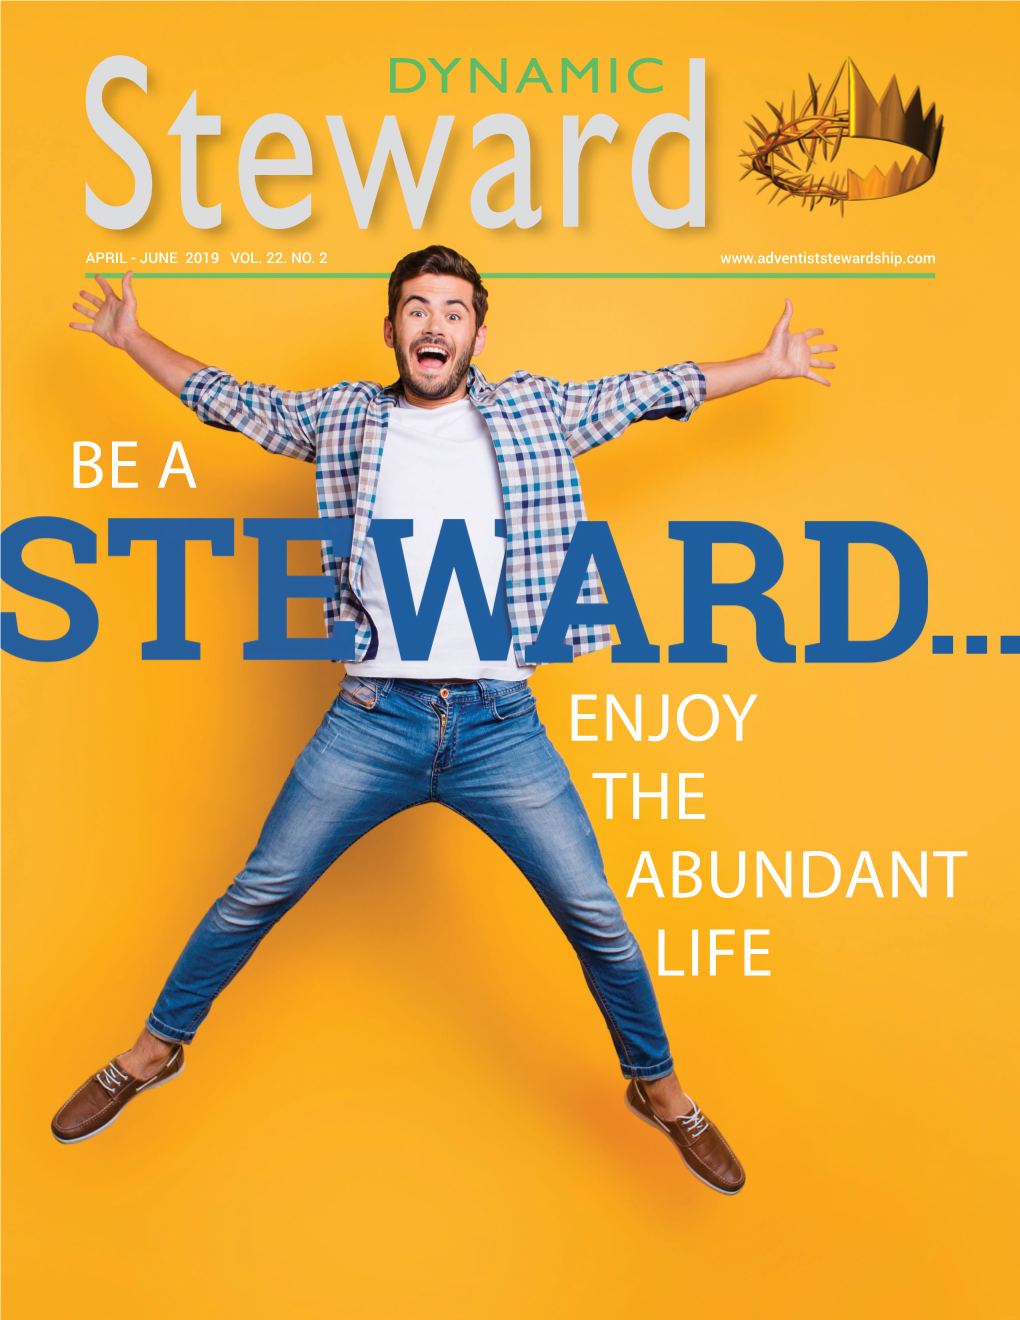 Be a Steward: Enjoy the Abundant Life